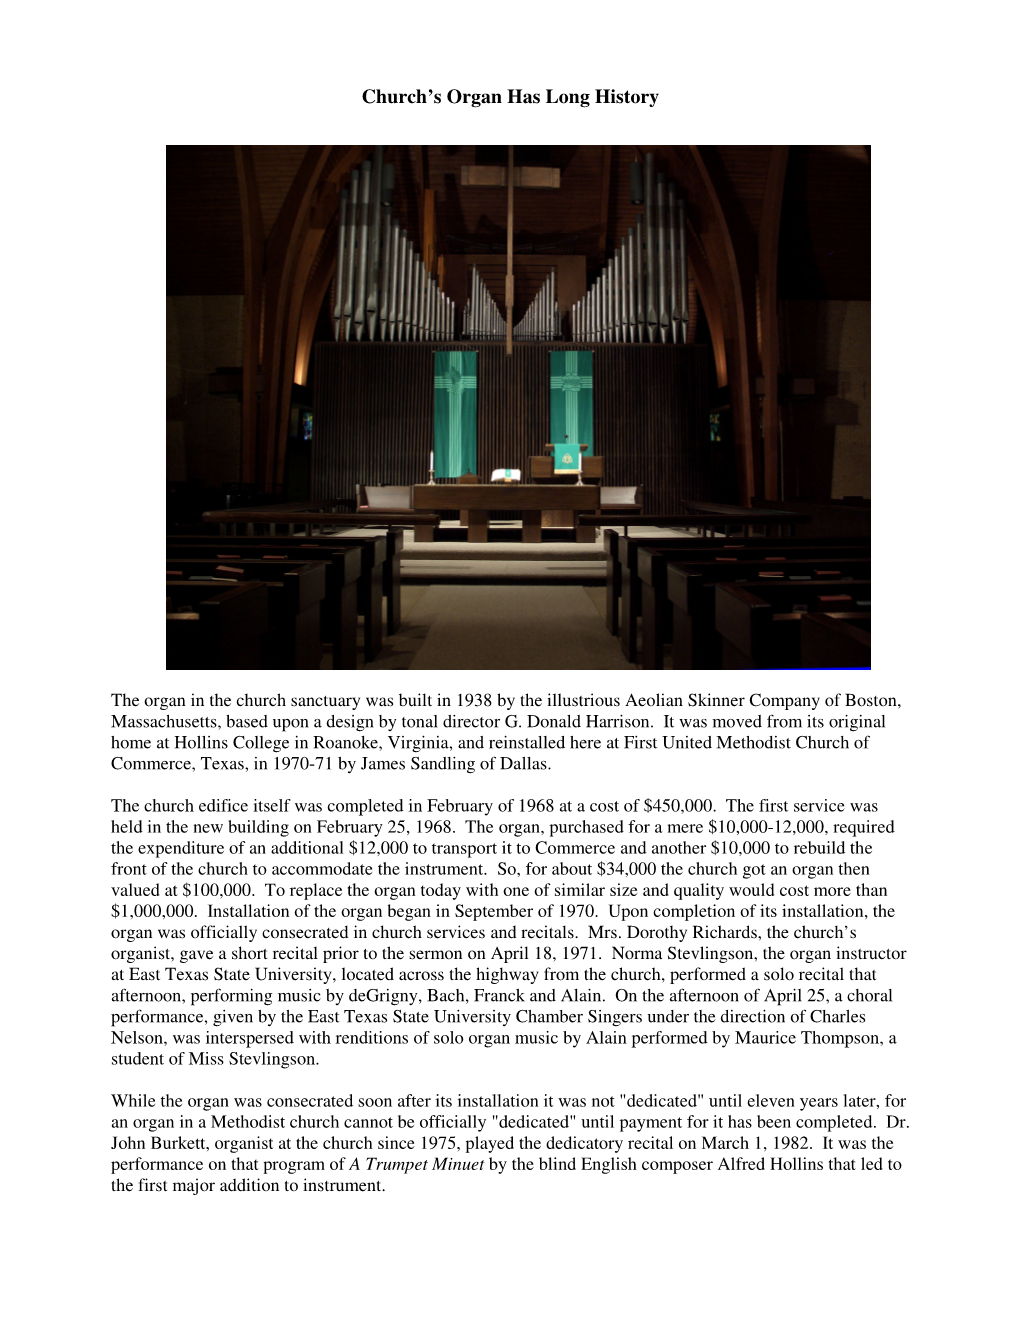 Church Organ History